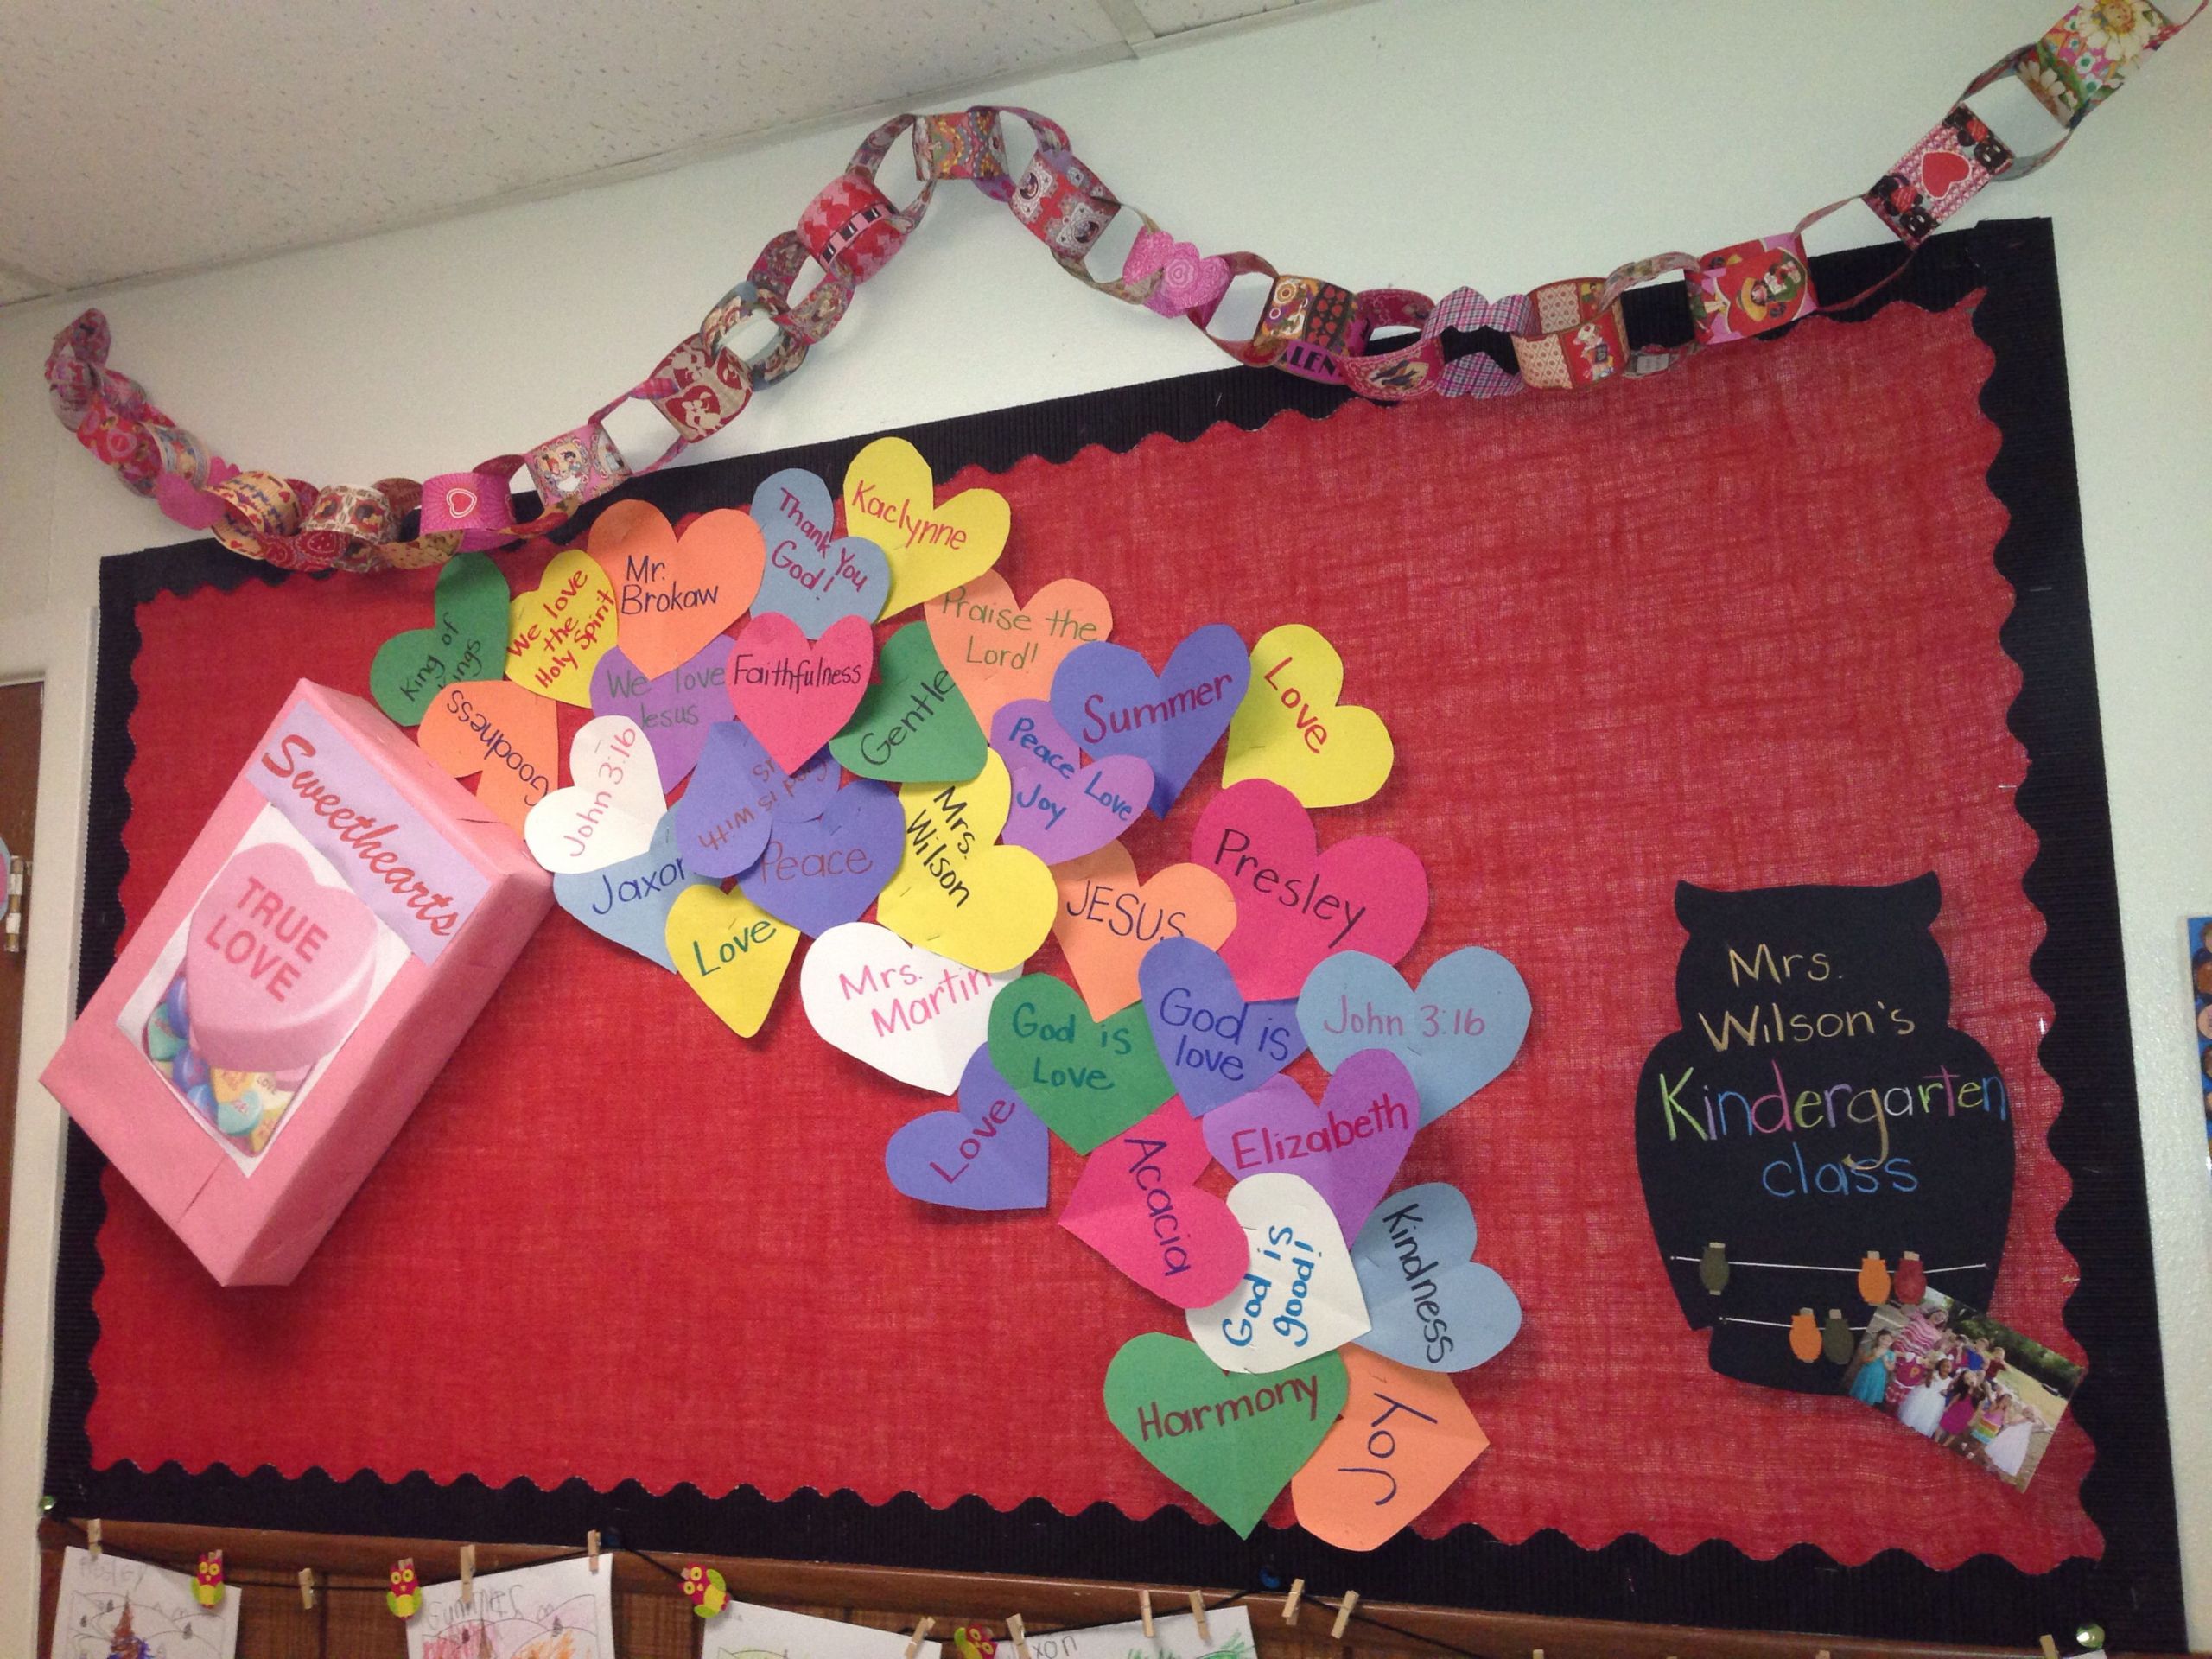 Valentines Day Bulletin Board Ideas For Preschool
 A Conversational Heart Bulletin Board